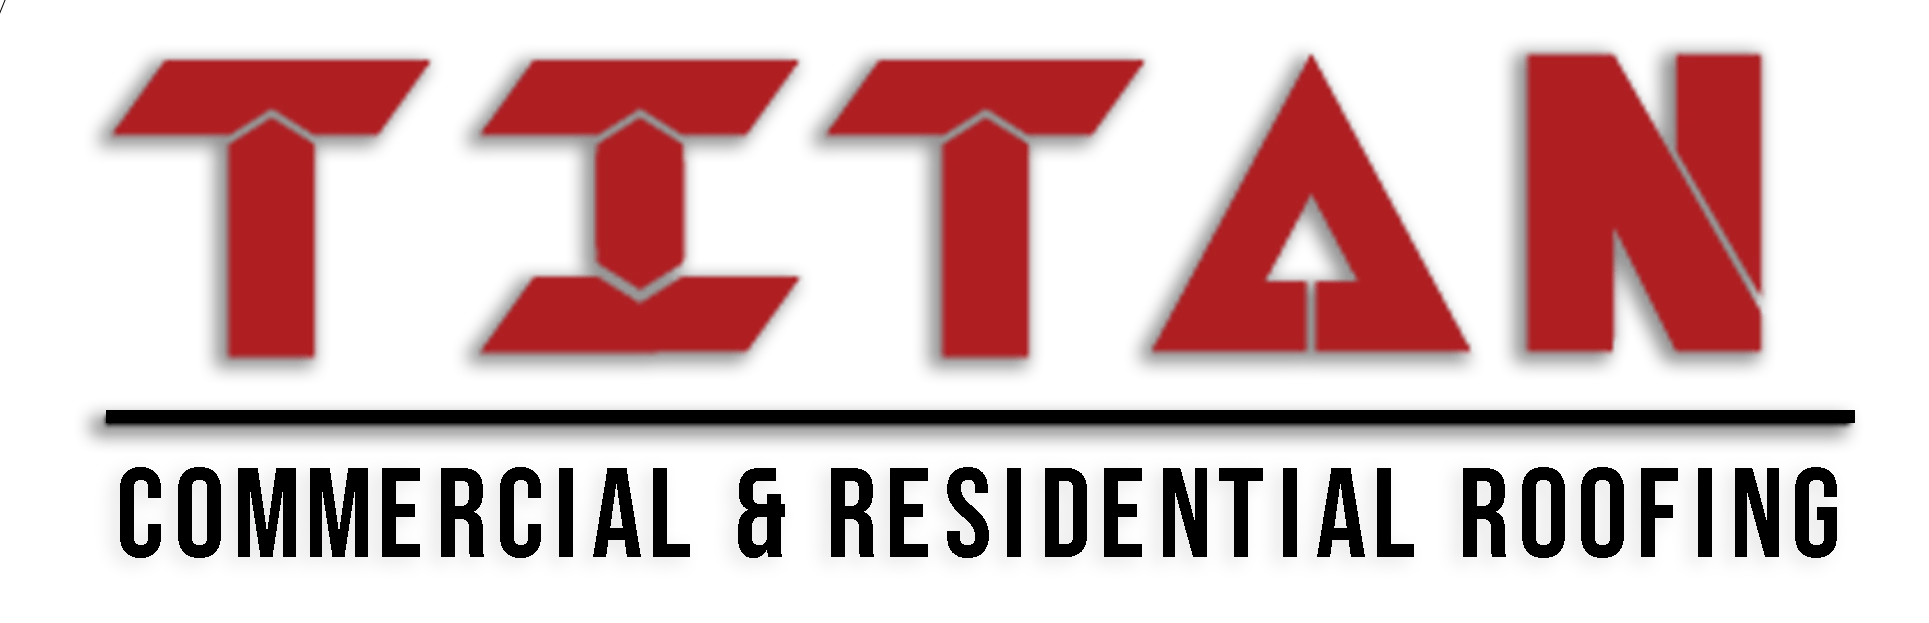 Titan Roofing Logo